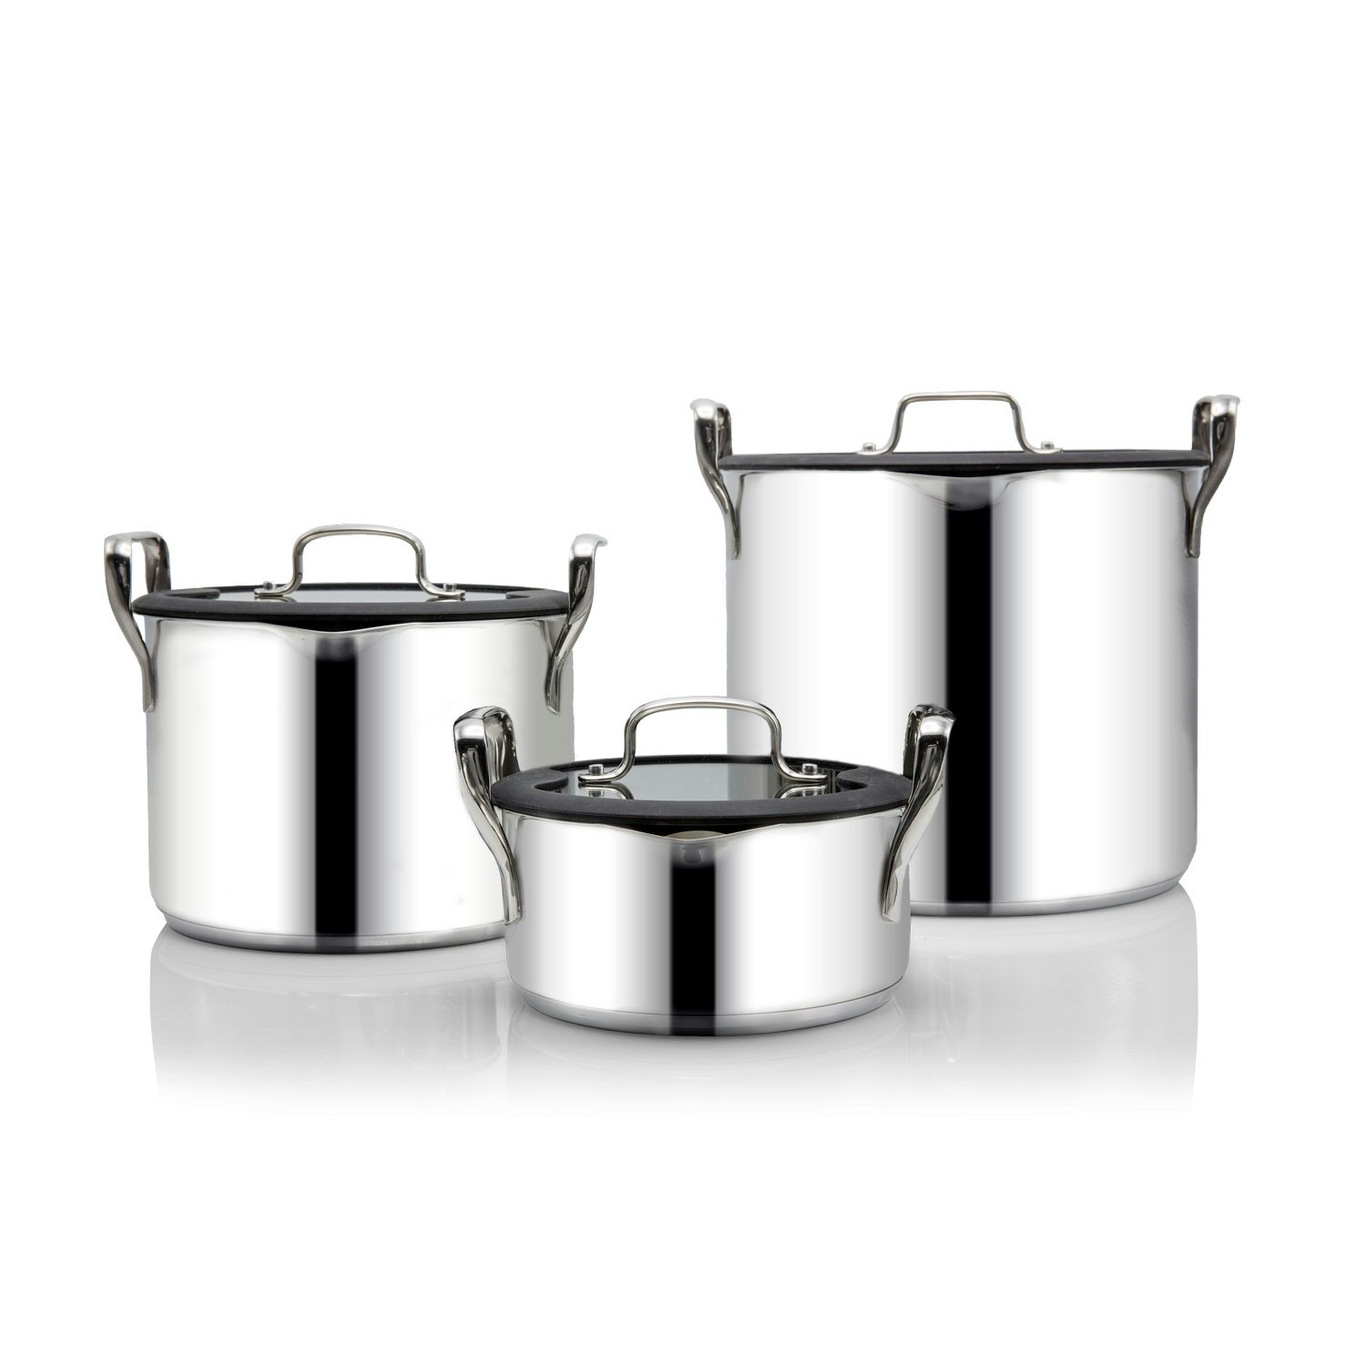 https://royaldesign.com/image/2/ego-stackable-pot-set-stainless-steel-4?w=800&quality=80